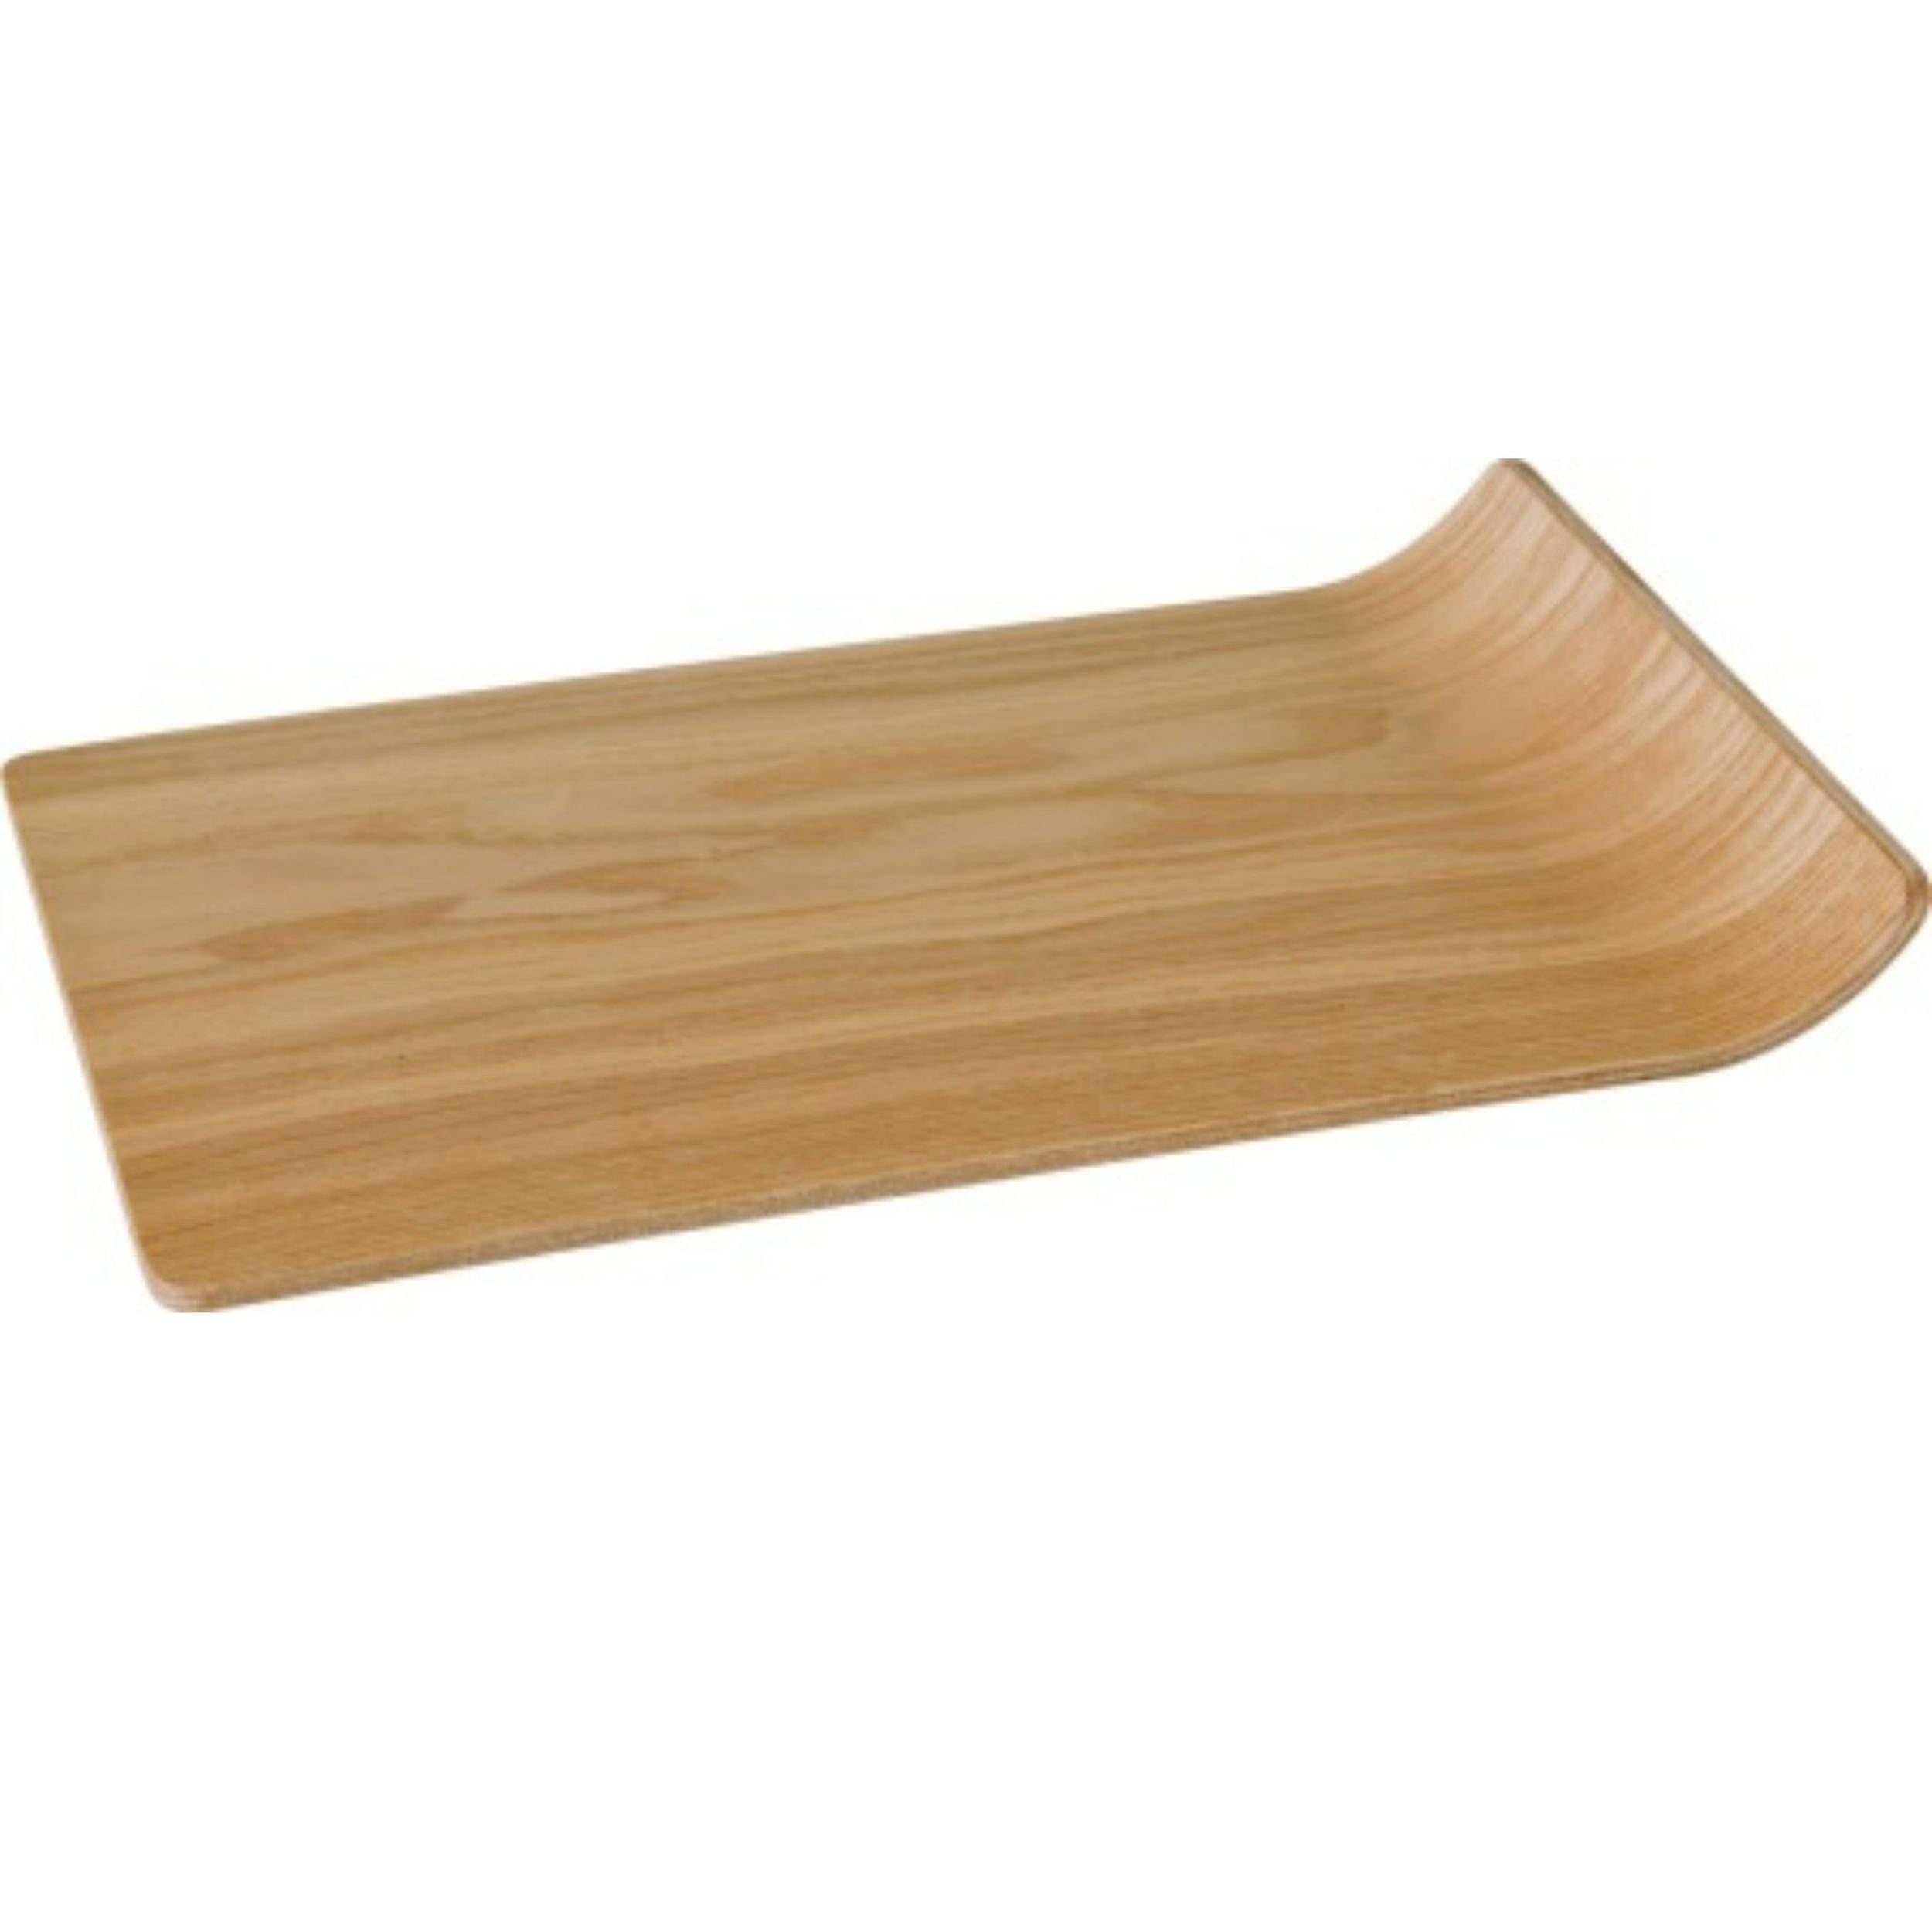 Maserung Holz Tablett DekoTown Tablett 30cm Natur mit eckig